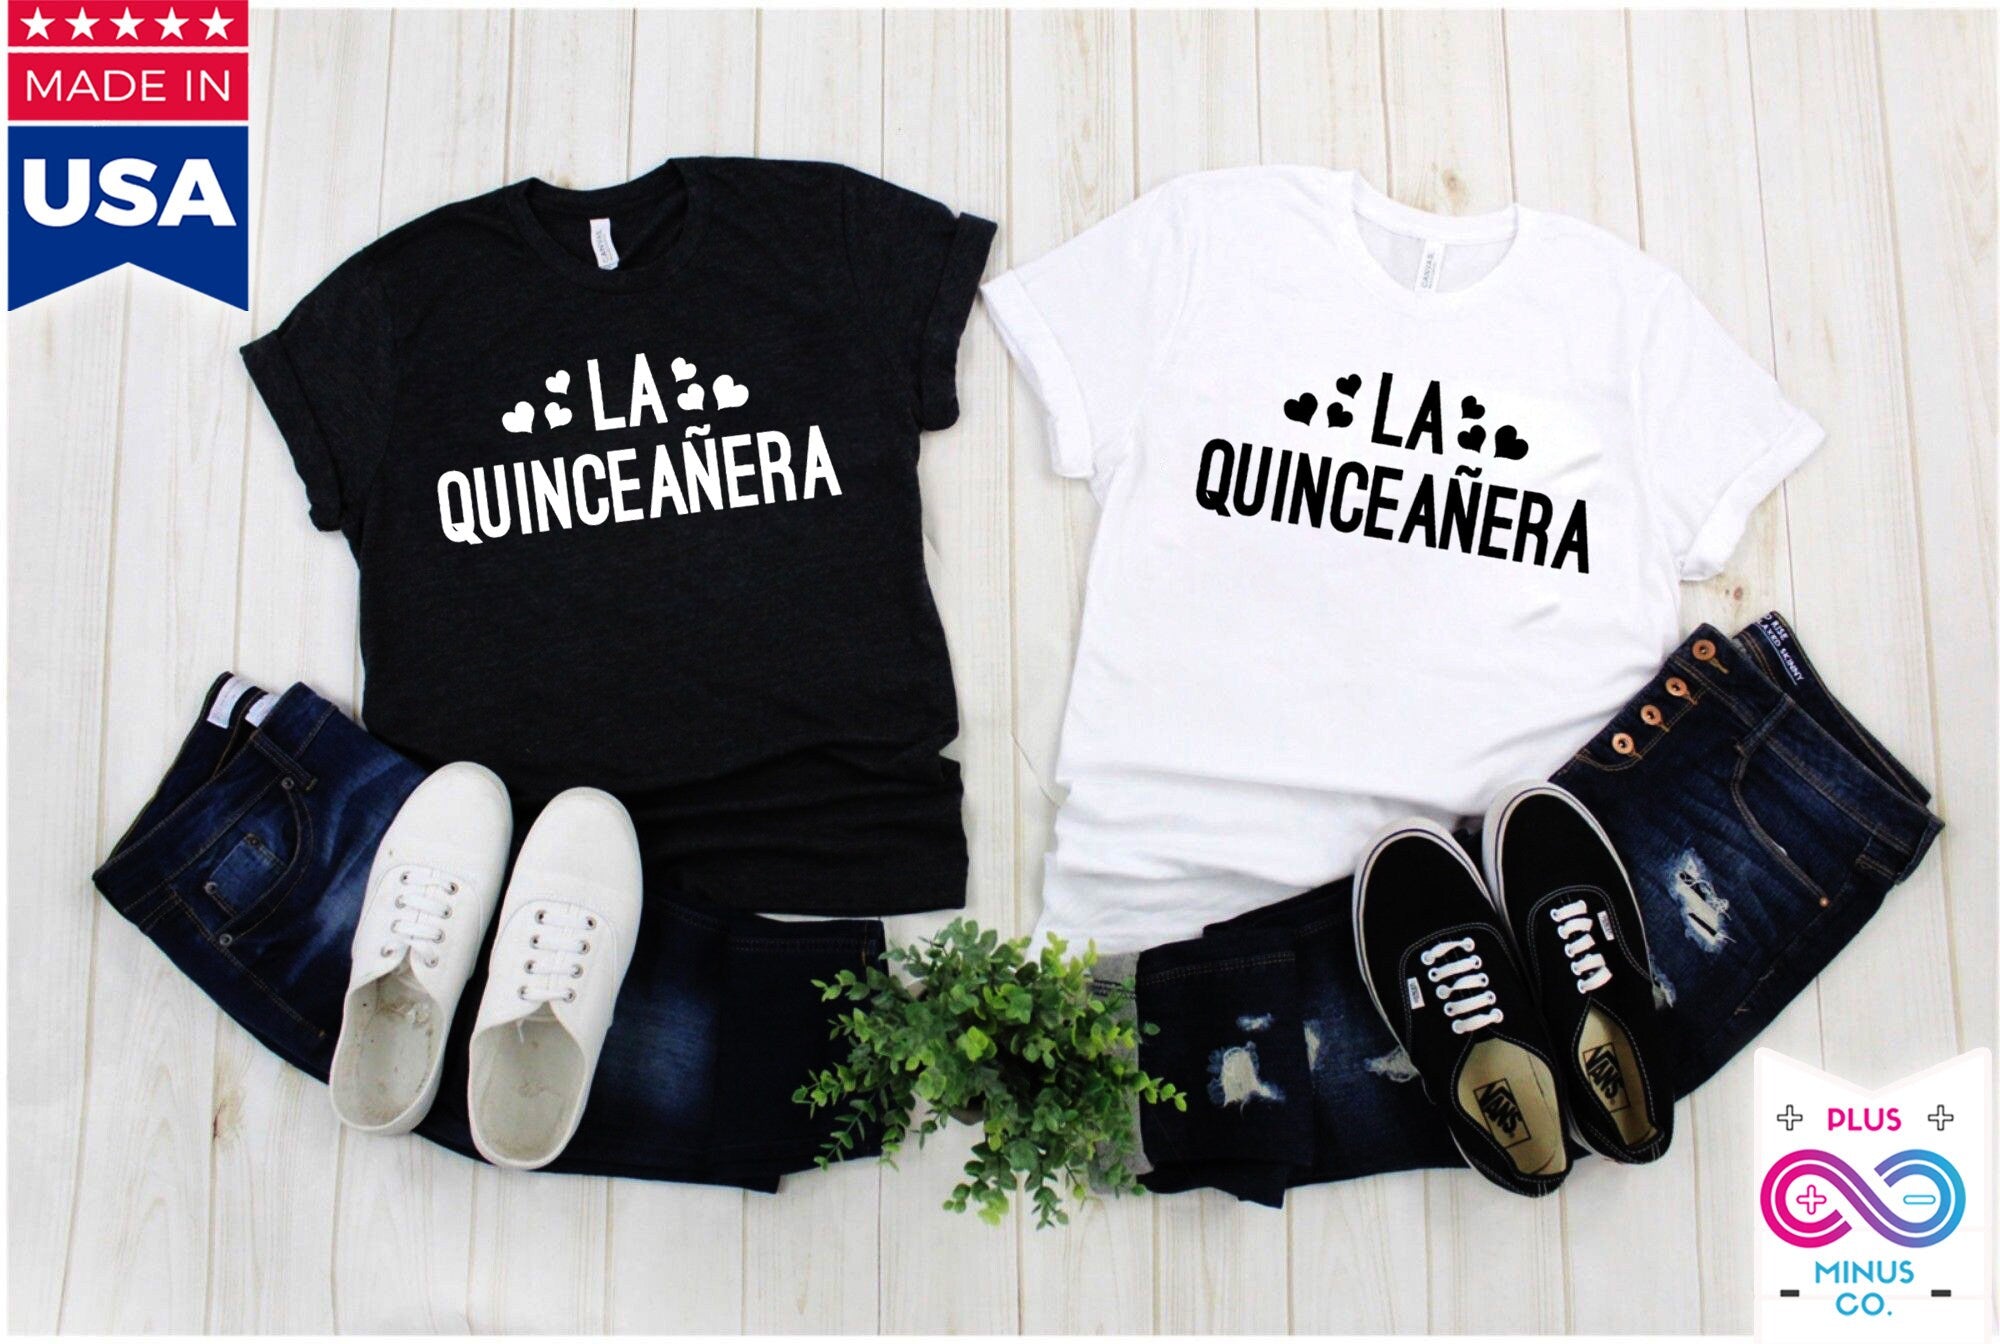 La Quinceañera Latina Hiszpańskie koszulki, meksykańska koszula Quinceanera Prezent strój na imprezę próbną, Quince Anos Party pigwowe koszule - plusminusco.com